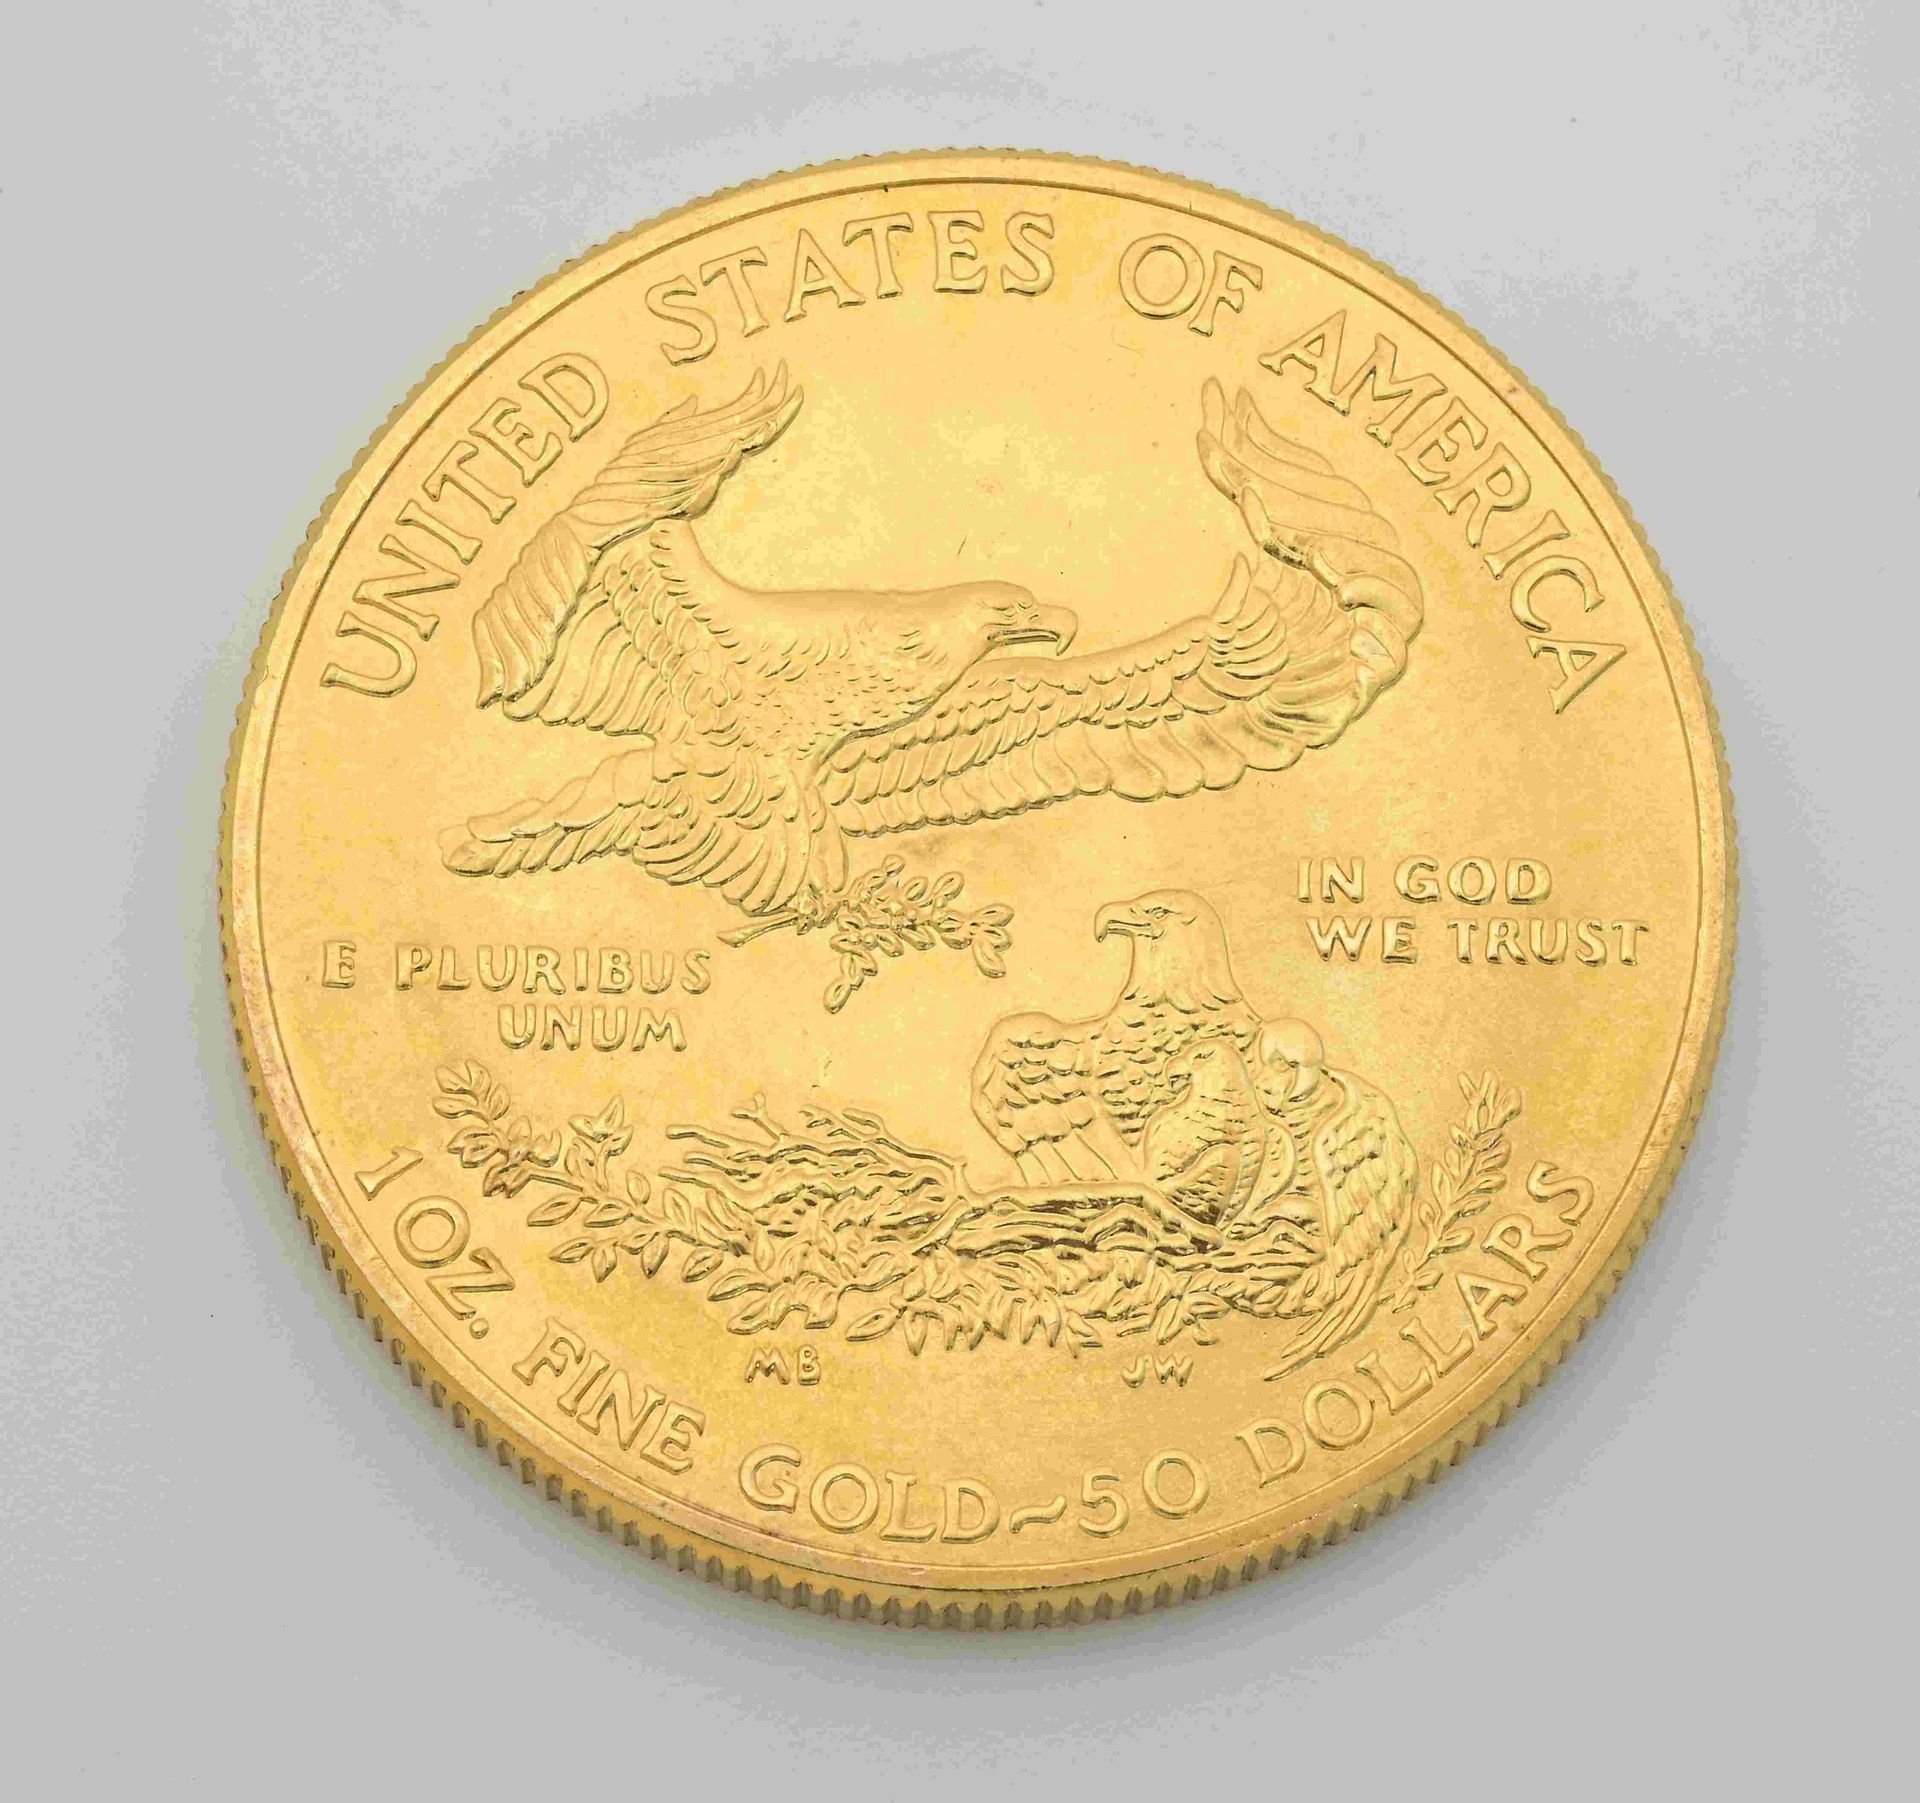 Null Moneta da 50 dollari USA da un'oncia d'oro fino, St Gaudens 2012.
In astucc&hellip;